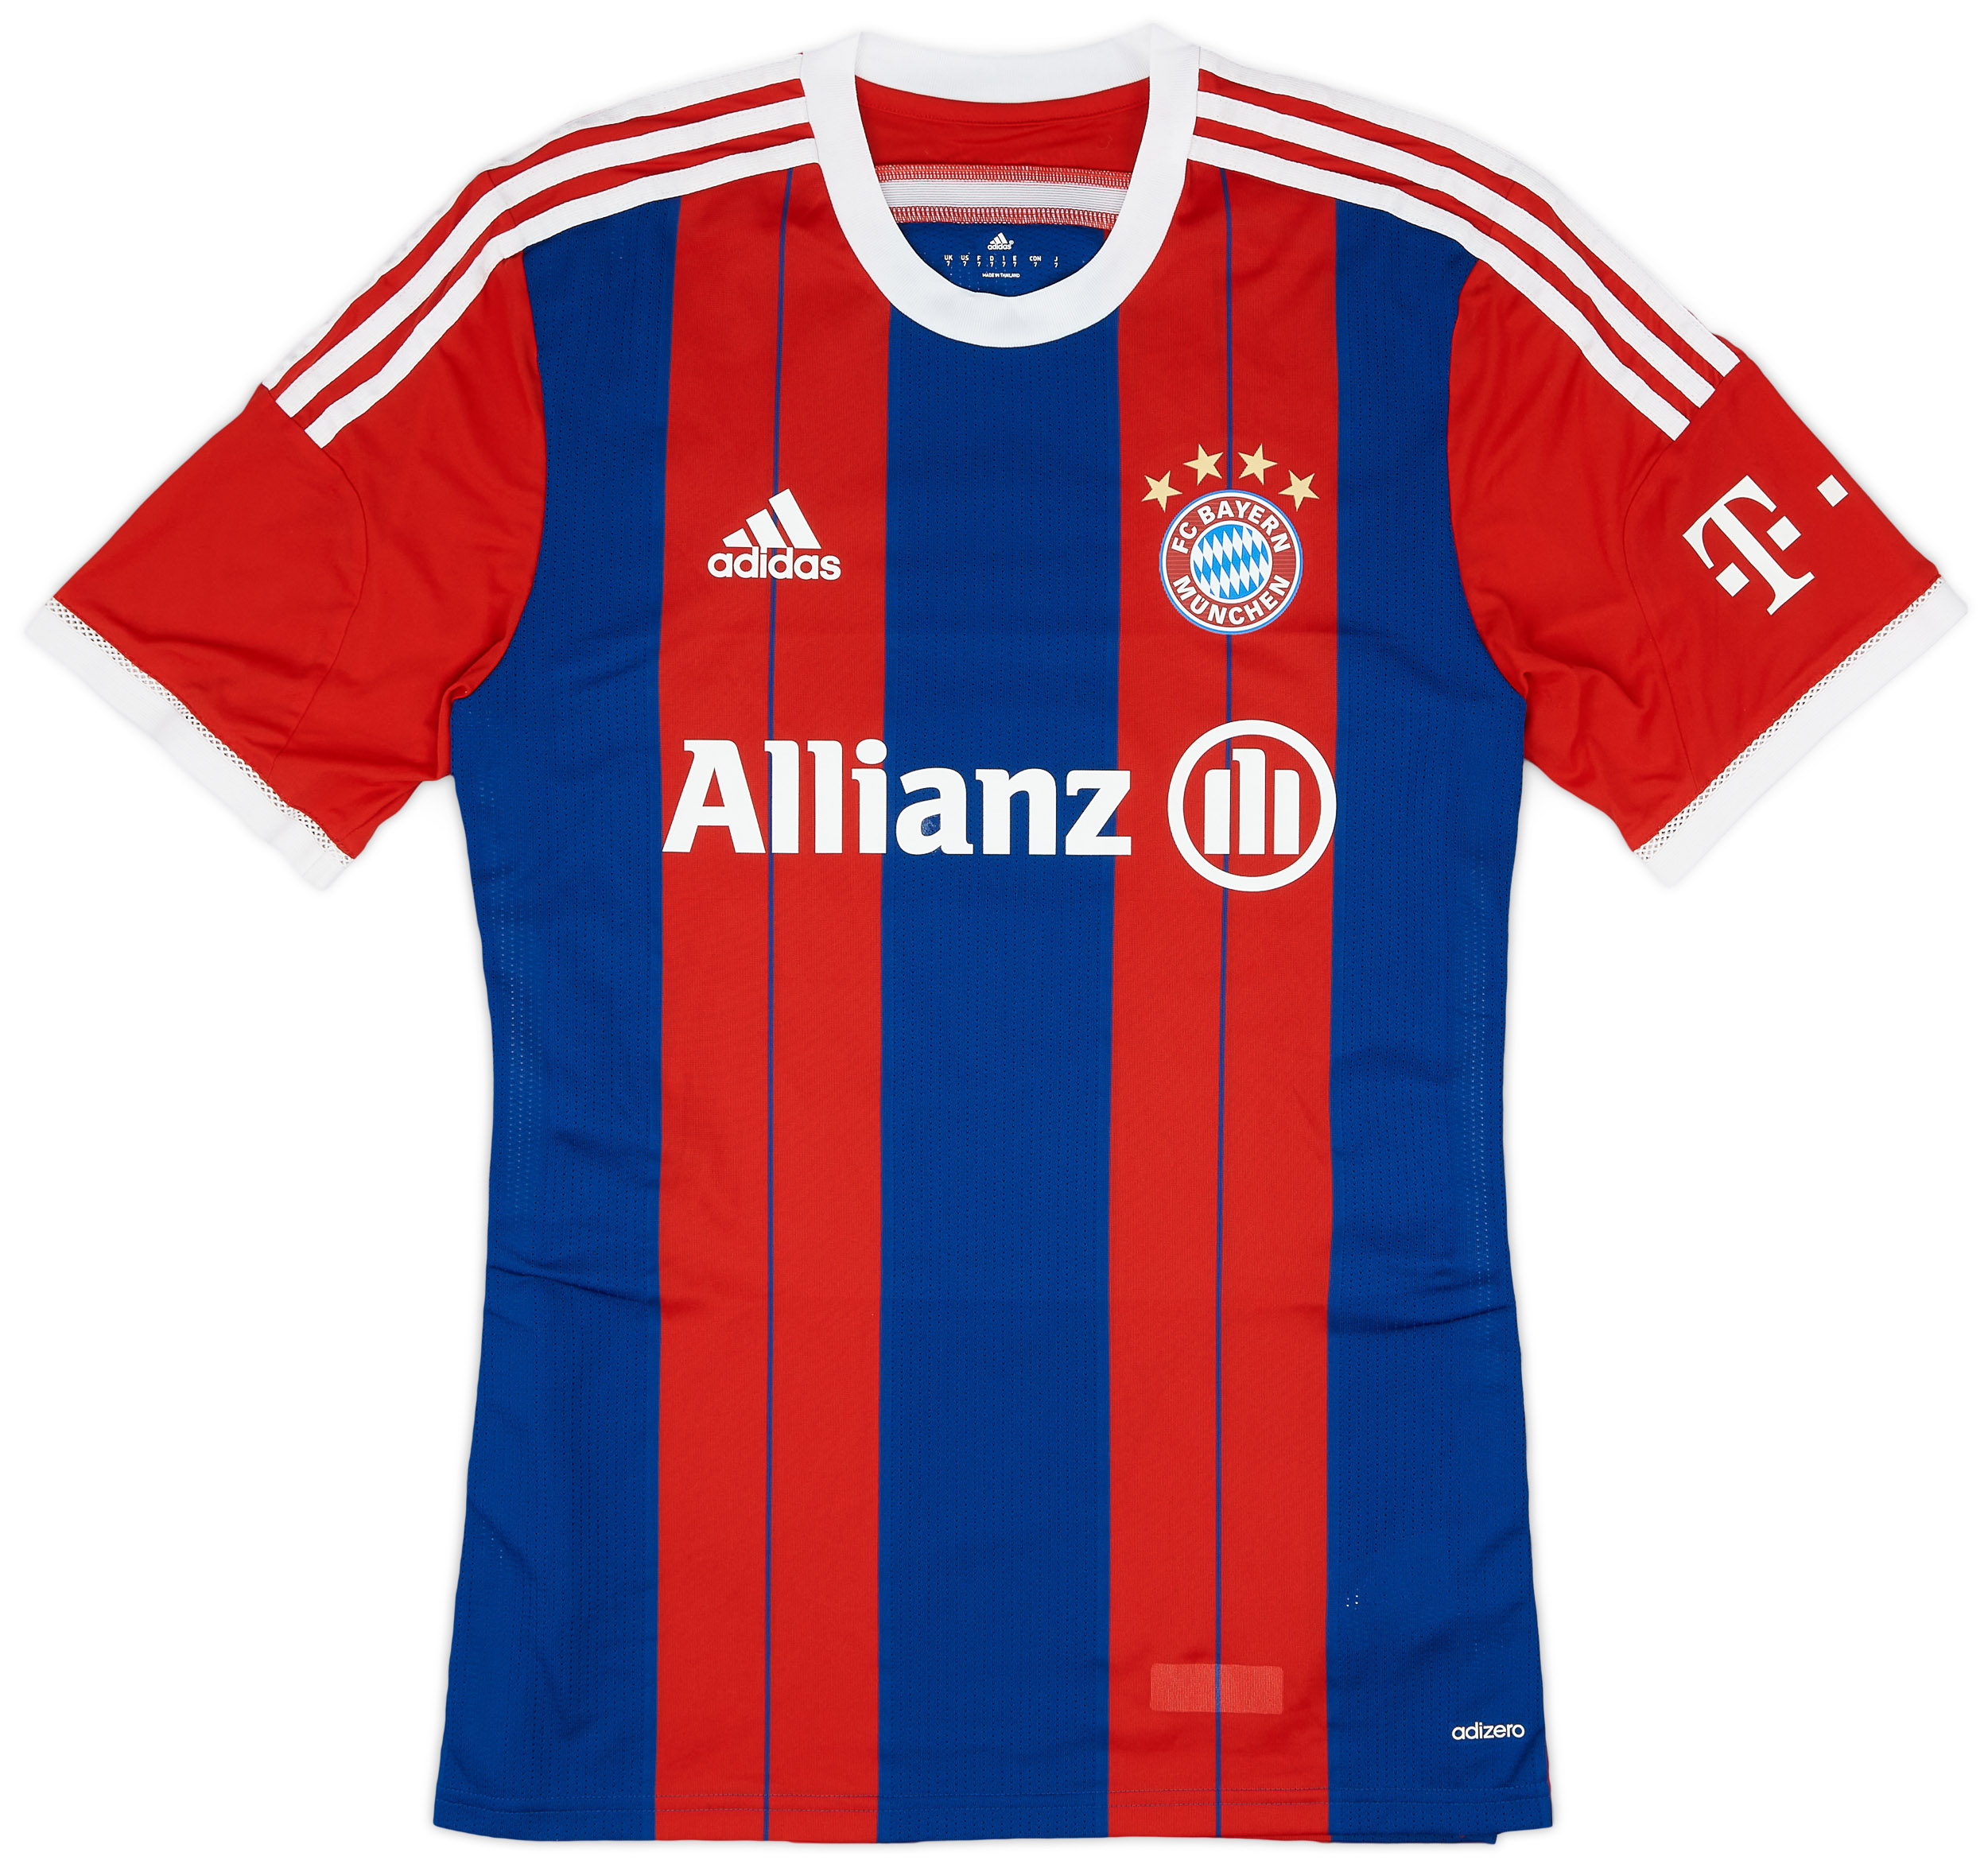 2014-15 Bayern Munich Frauen Authentic Home Shirt - 9/10 - ()